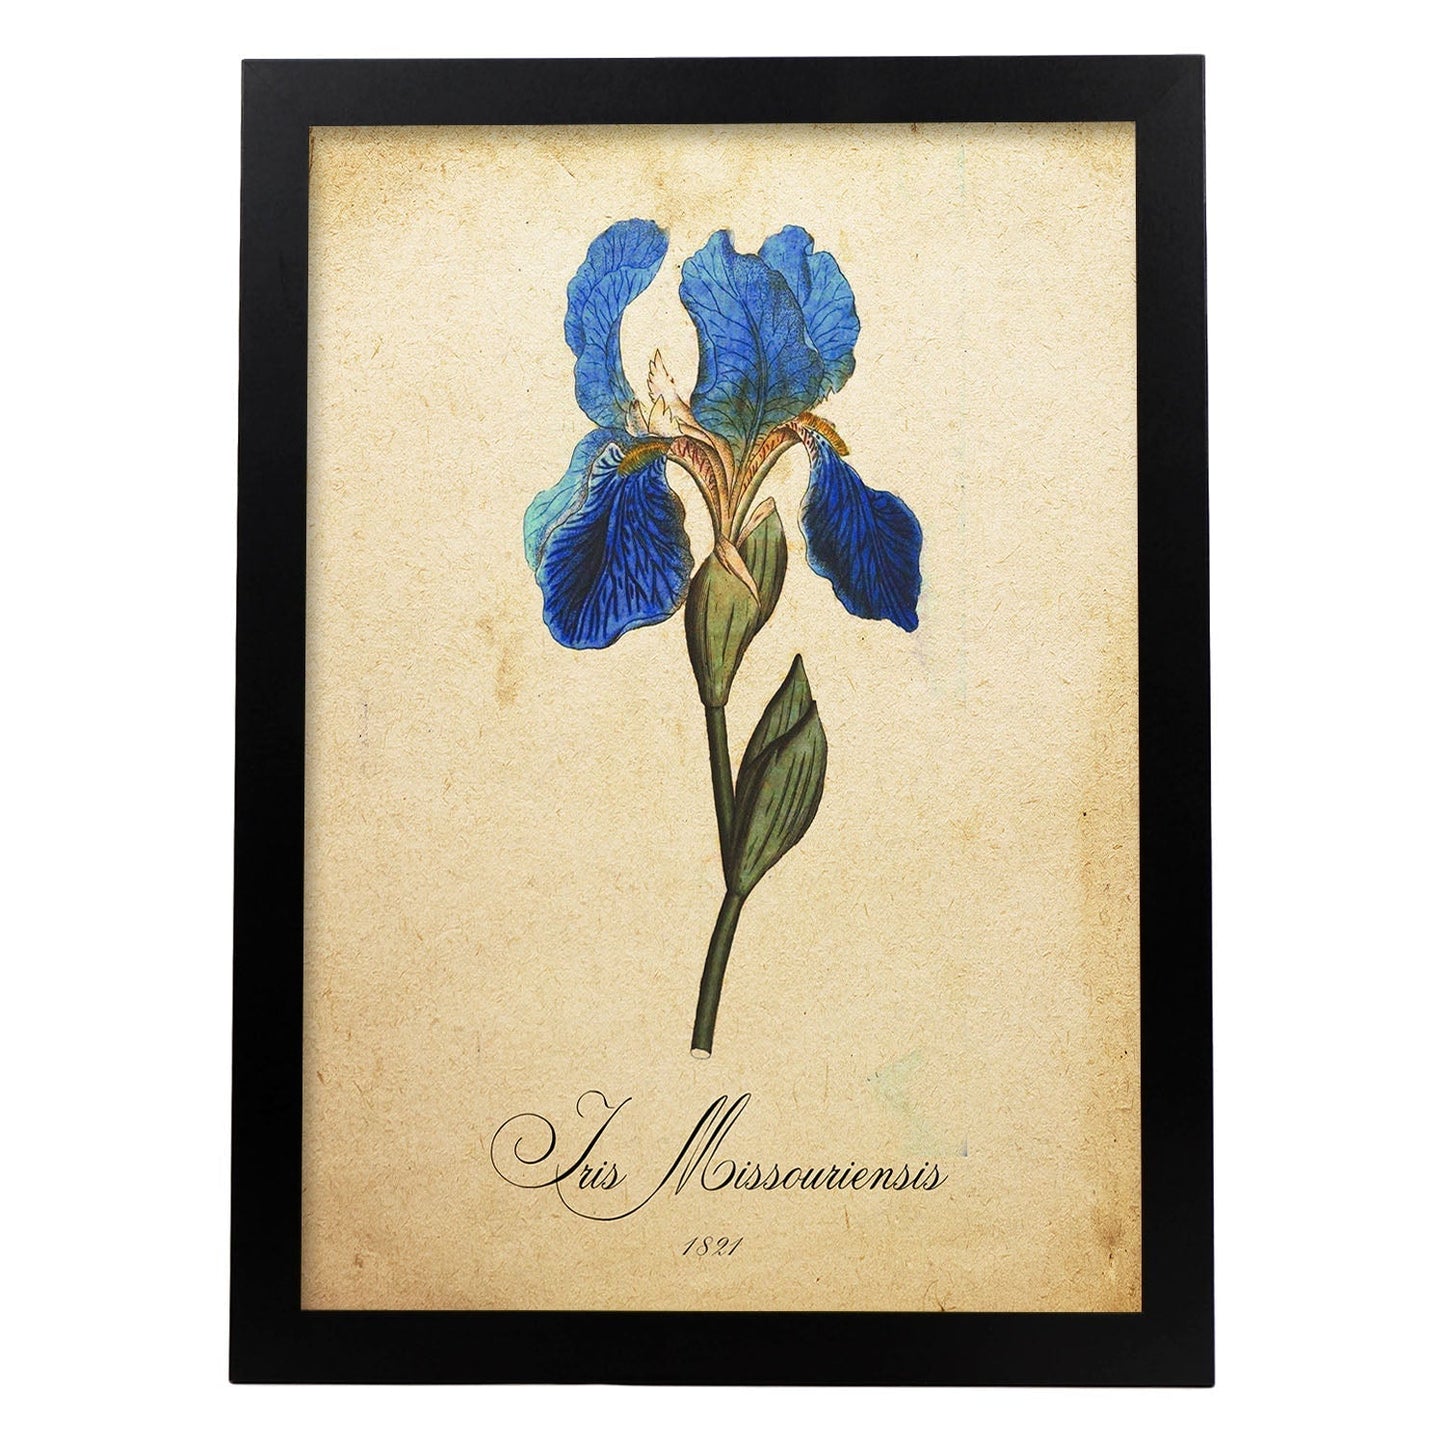 Poster de flores vintage. Lámina Iris missouriensis con diseño vintage.-Artwork-Nacnic-A4-Marco Negro-Nacnic Estudio SL